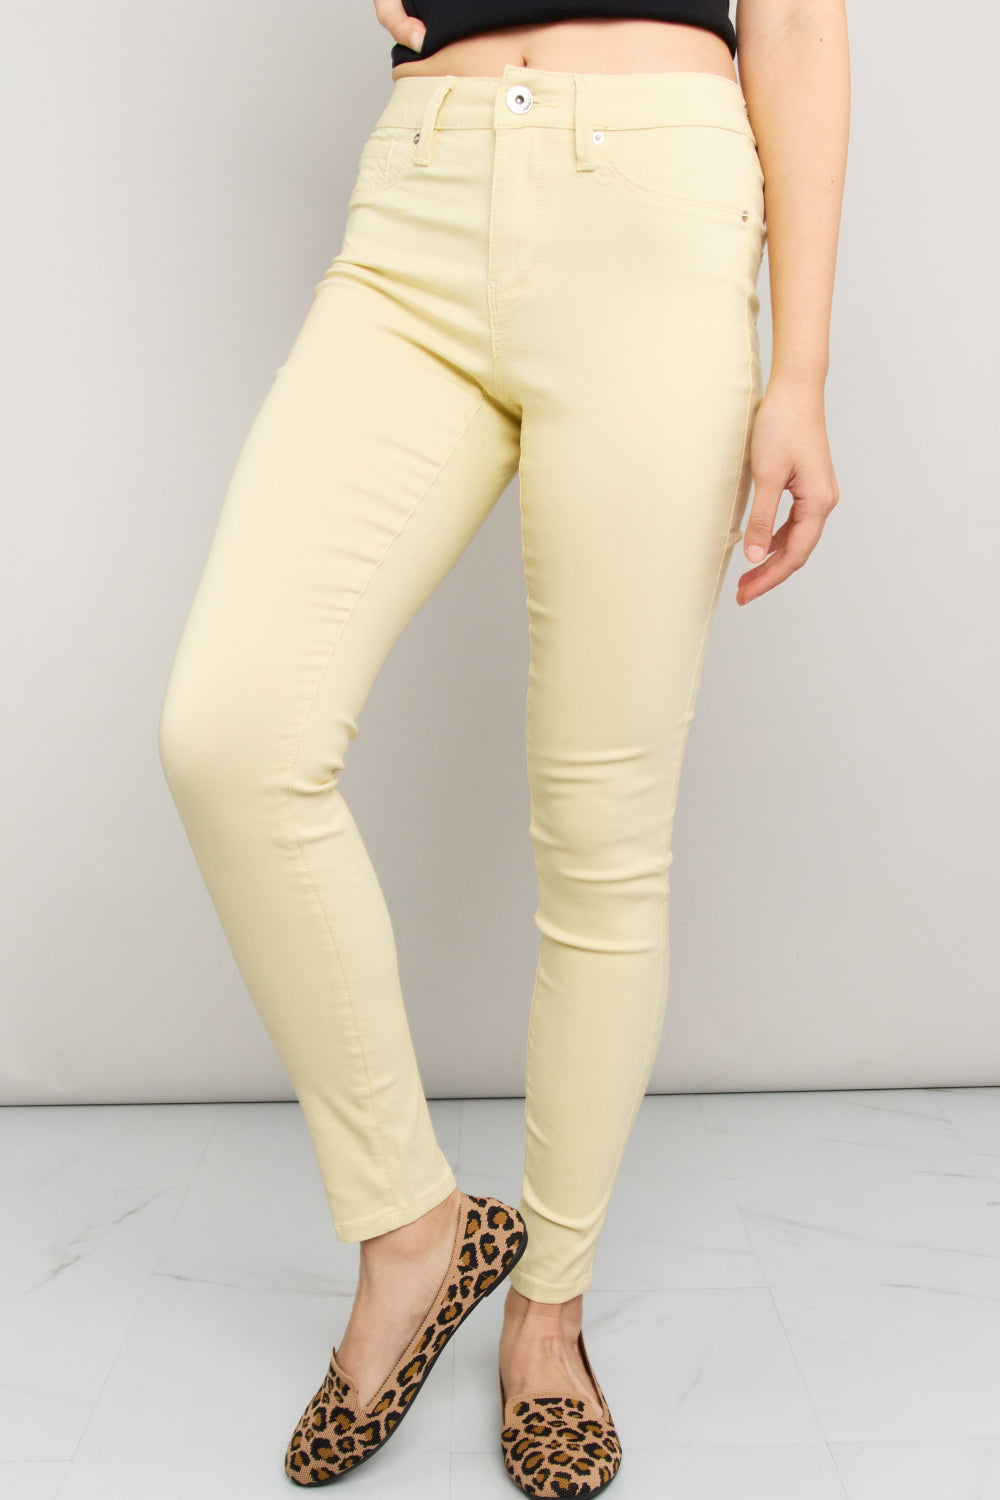 YMI Jeanswear Kate Hyper-Stretch Full Size Mid-Rise Skinny Jeans in Banana Cream